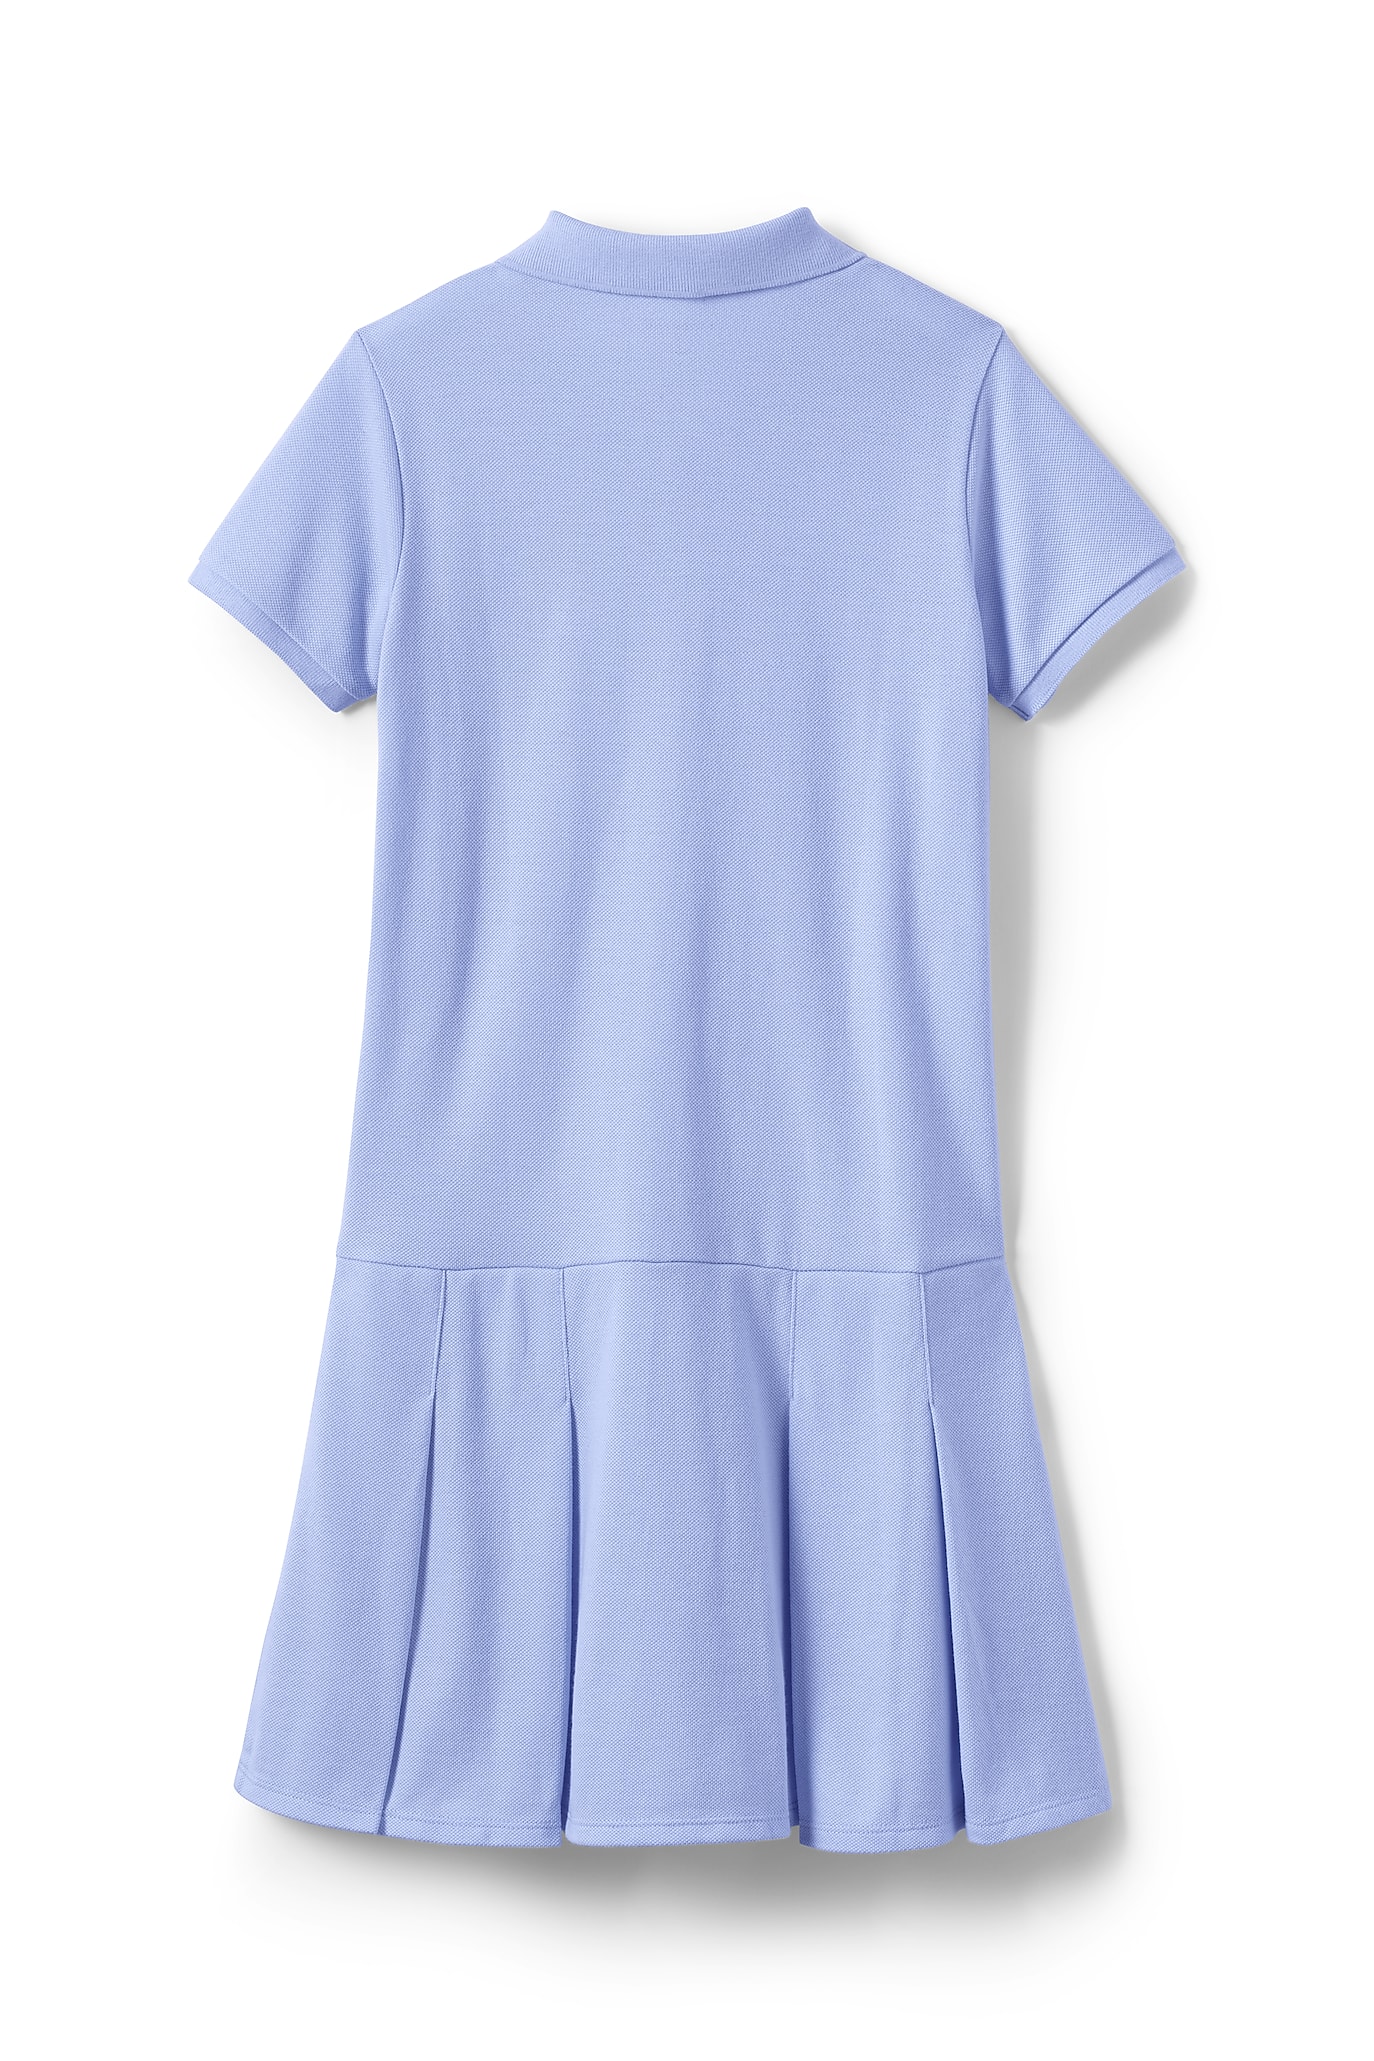 Lands' End Girls School Uniform Short Sleeve Mesh Polo Dress (Little Girls & Big Girls) - image 2 of 2